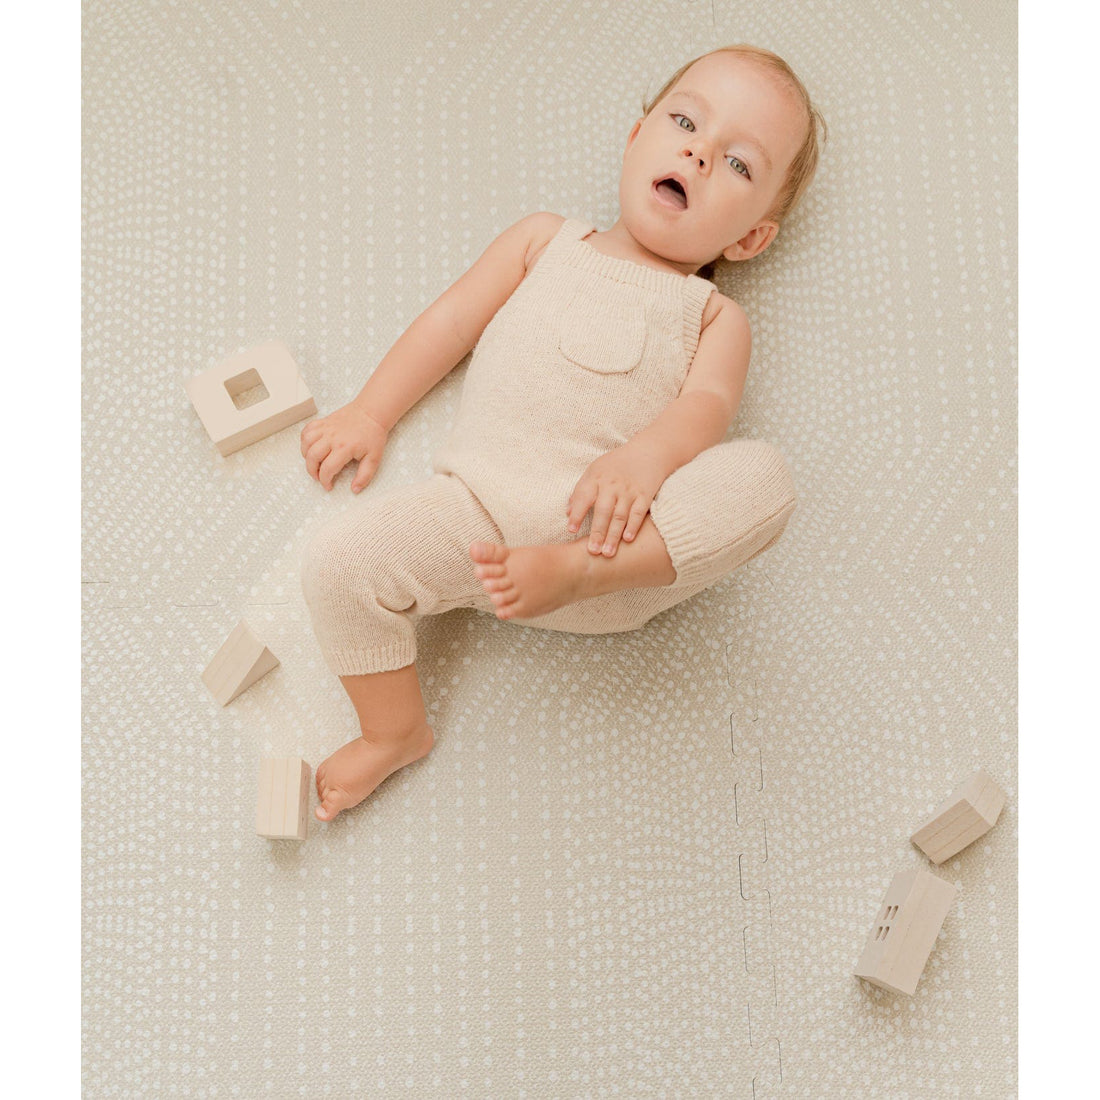 toddlekind-prettier-puzzle-playmat-deco-ecru-120x180cm-6-tiles-&-12-edging-borders-todk-337962